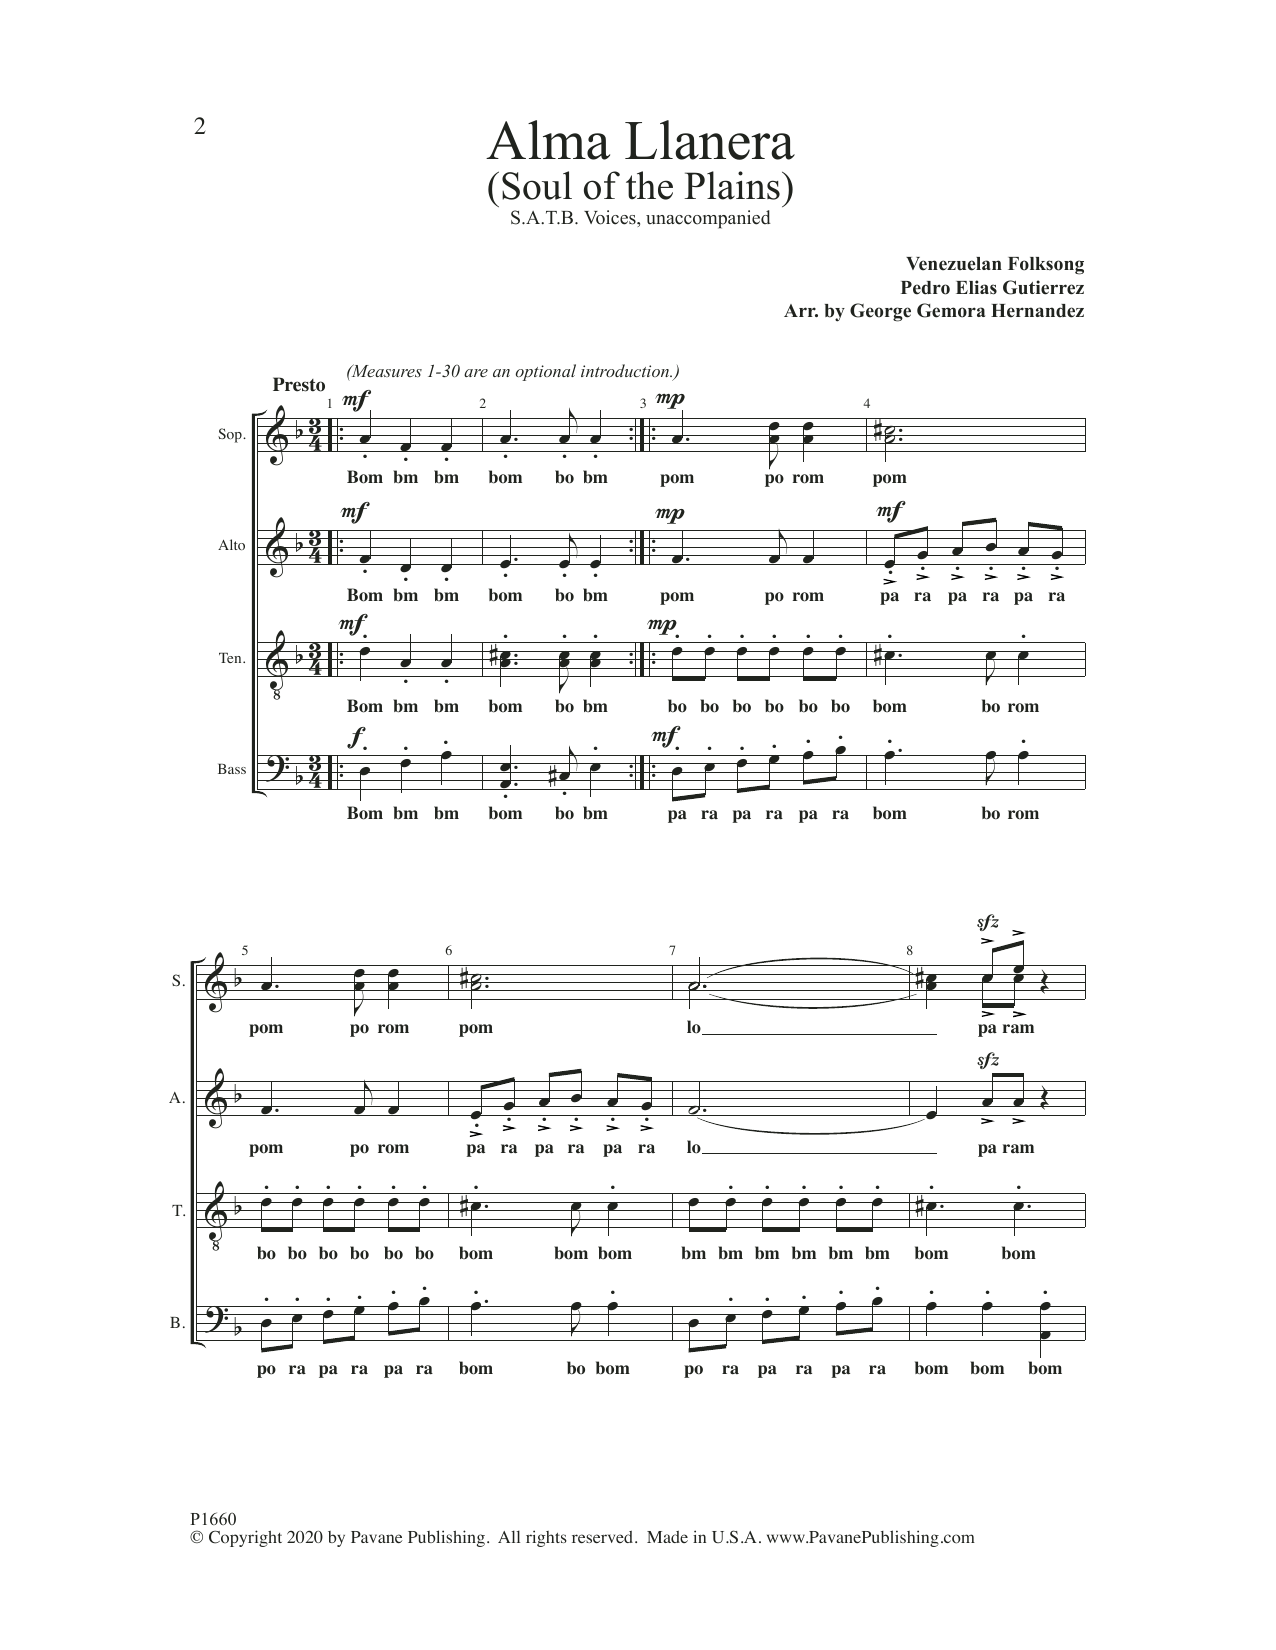 Venezuelan Folk Song Alam Llanera (arr. George Gemora Hernandez) Sheet Music Notes & Chords for SATB Choir - Download or Print PDF